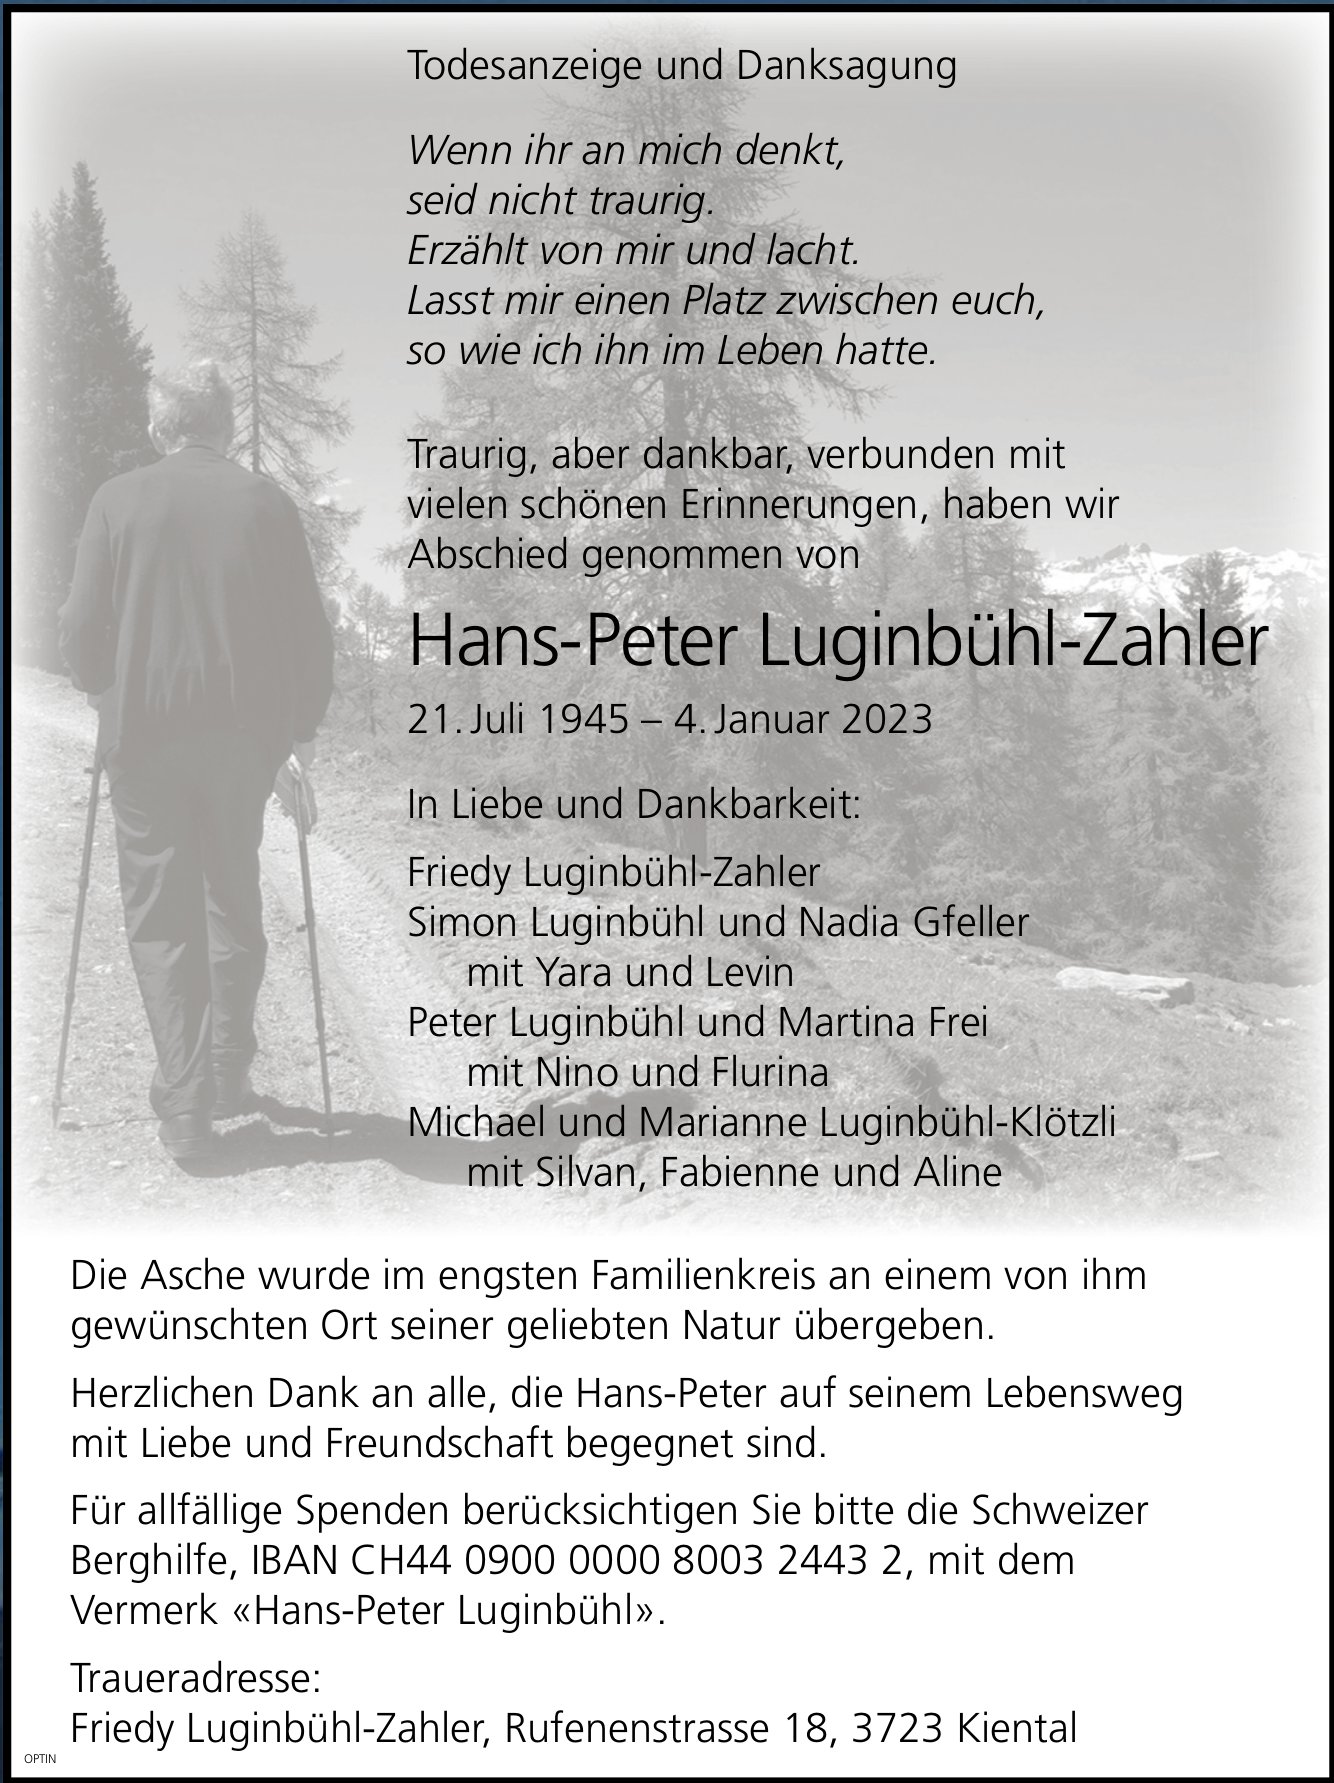 Hans-Peter Luginbühl-Zahler, Januar 2023 / TA